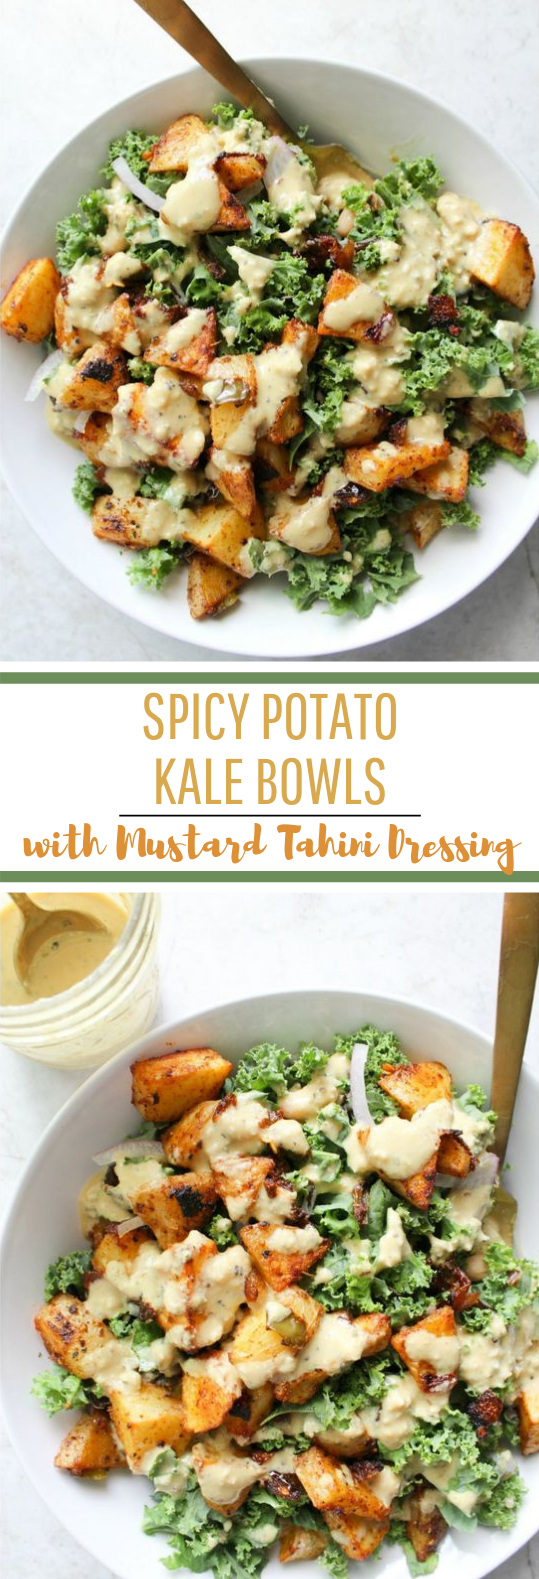 Spicy Potato Kale Bowls with Mustard Tahini Dressing #breakfast #vegetarian